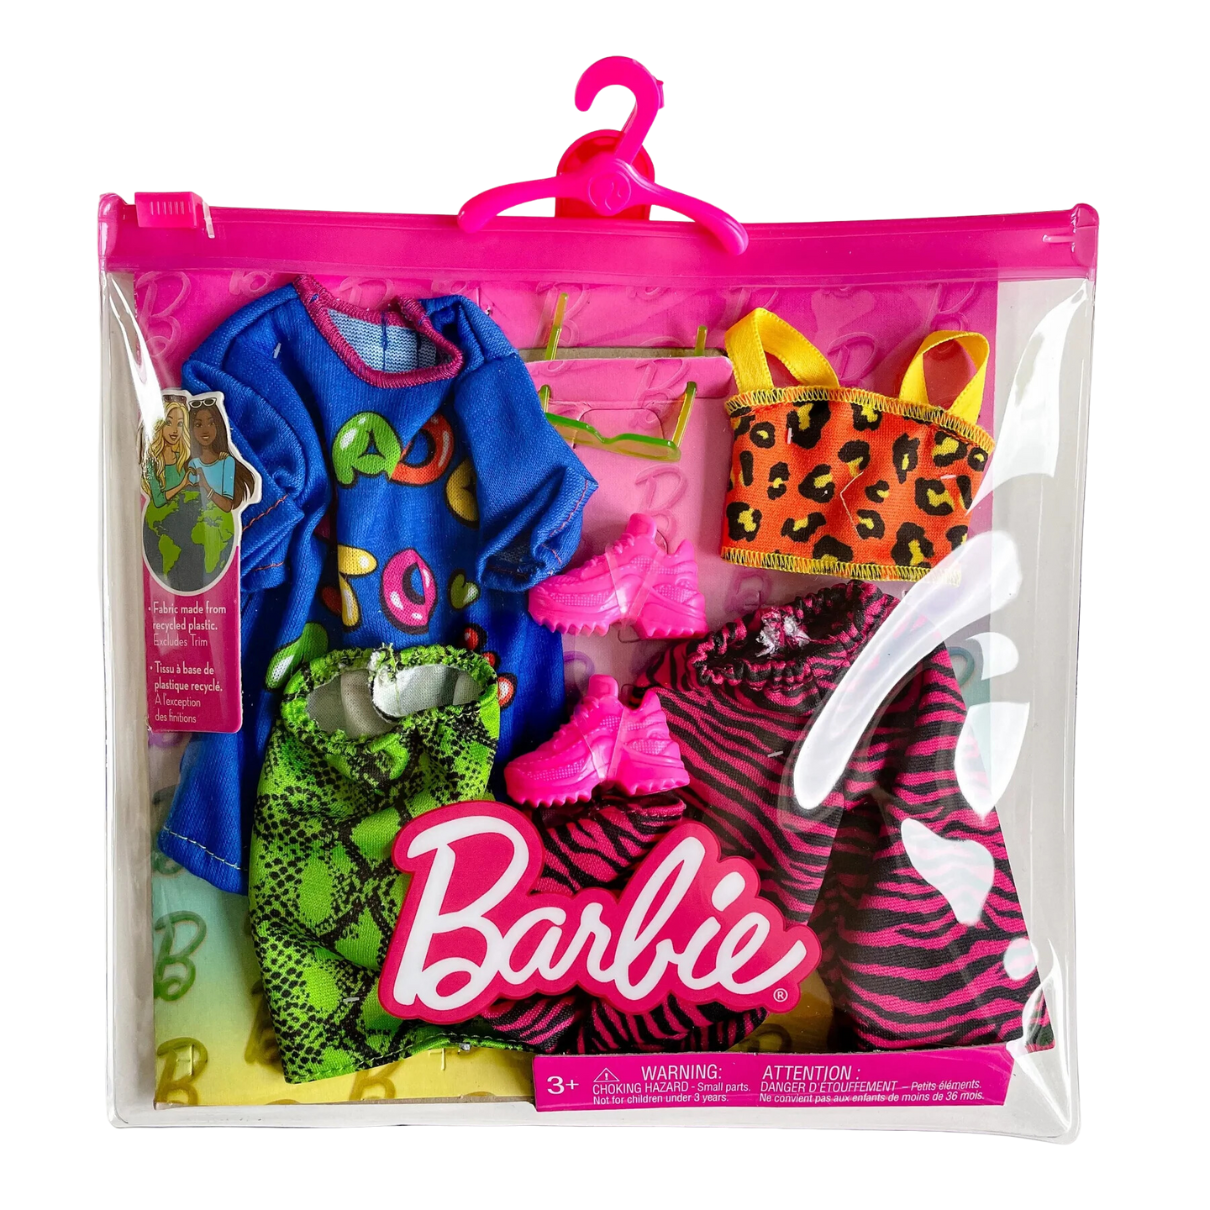 Kit de roupas de boneca barbie